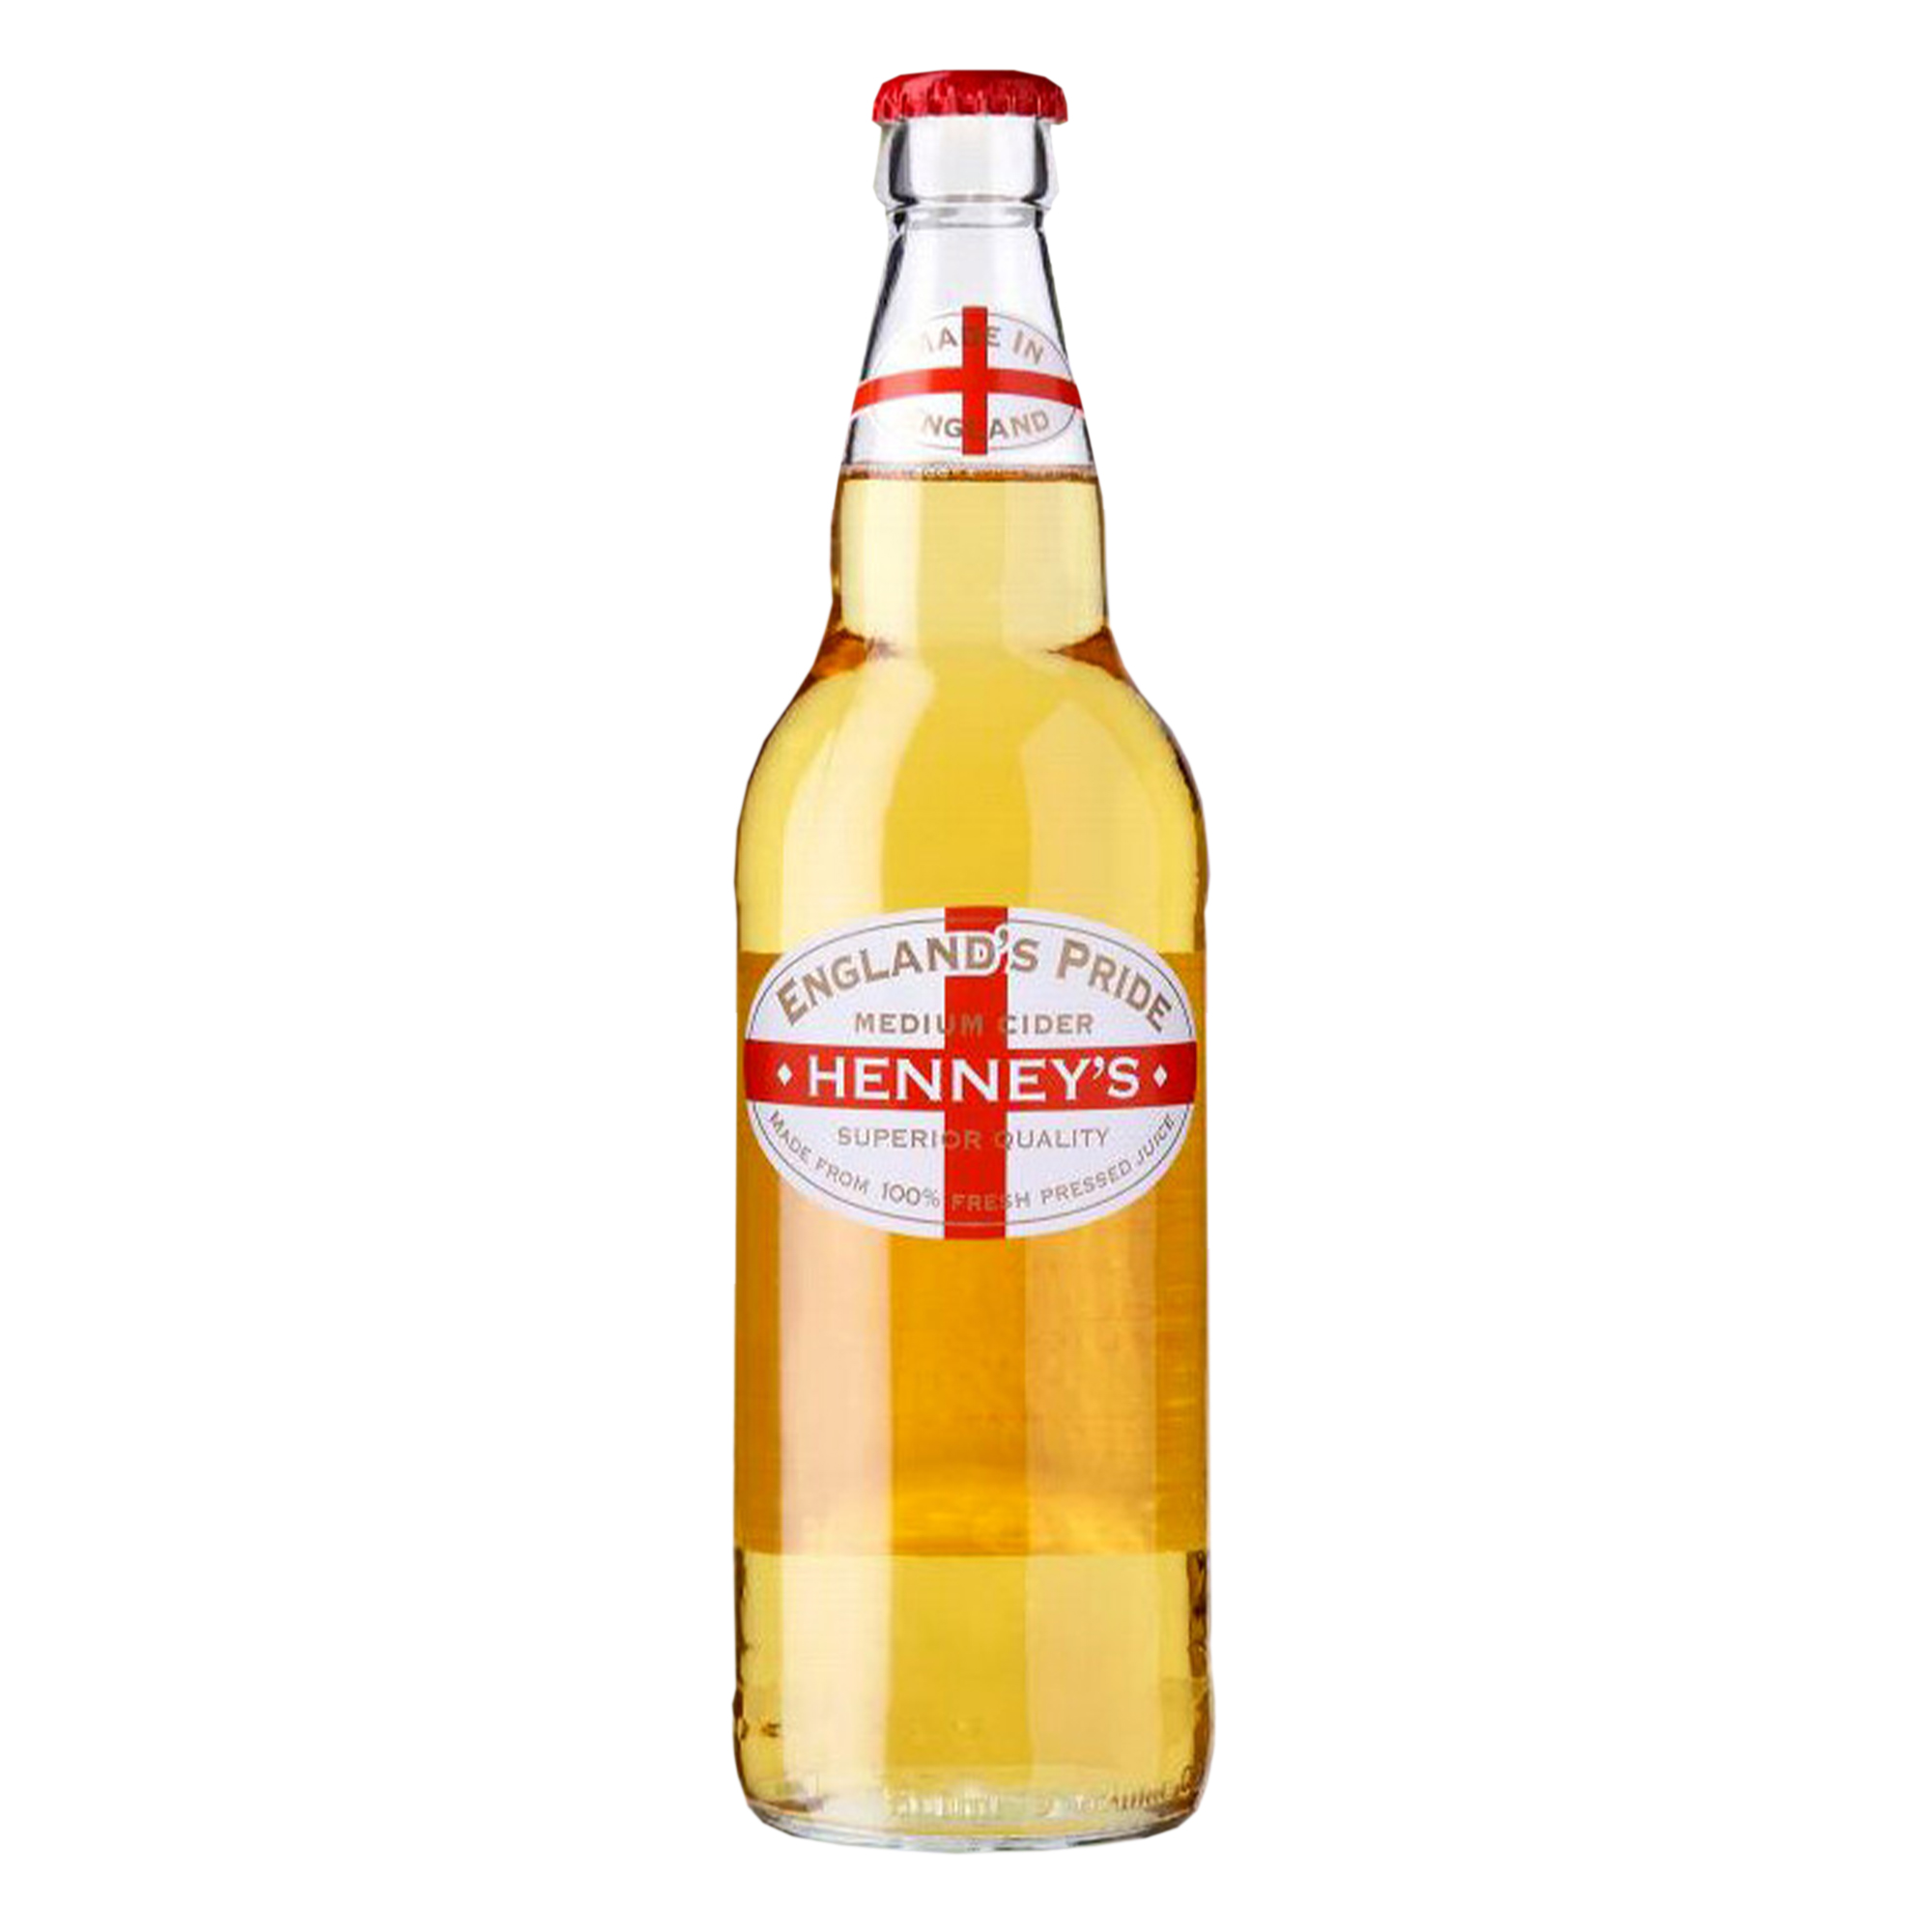 Henney's England's Pride Medium Cider 500ml